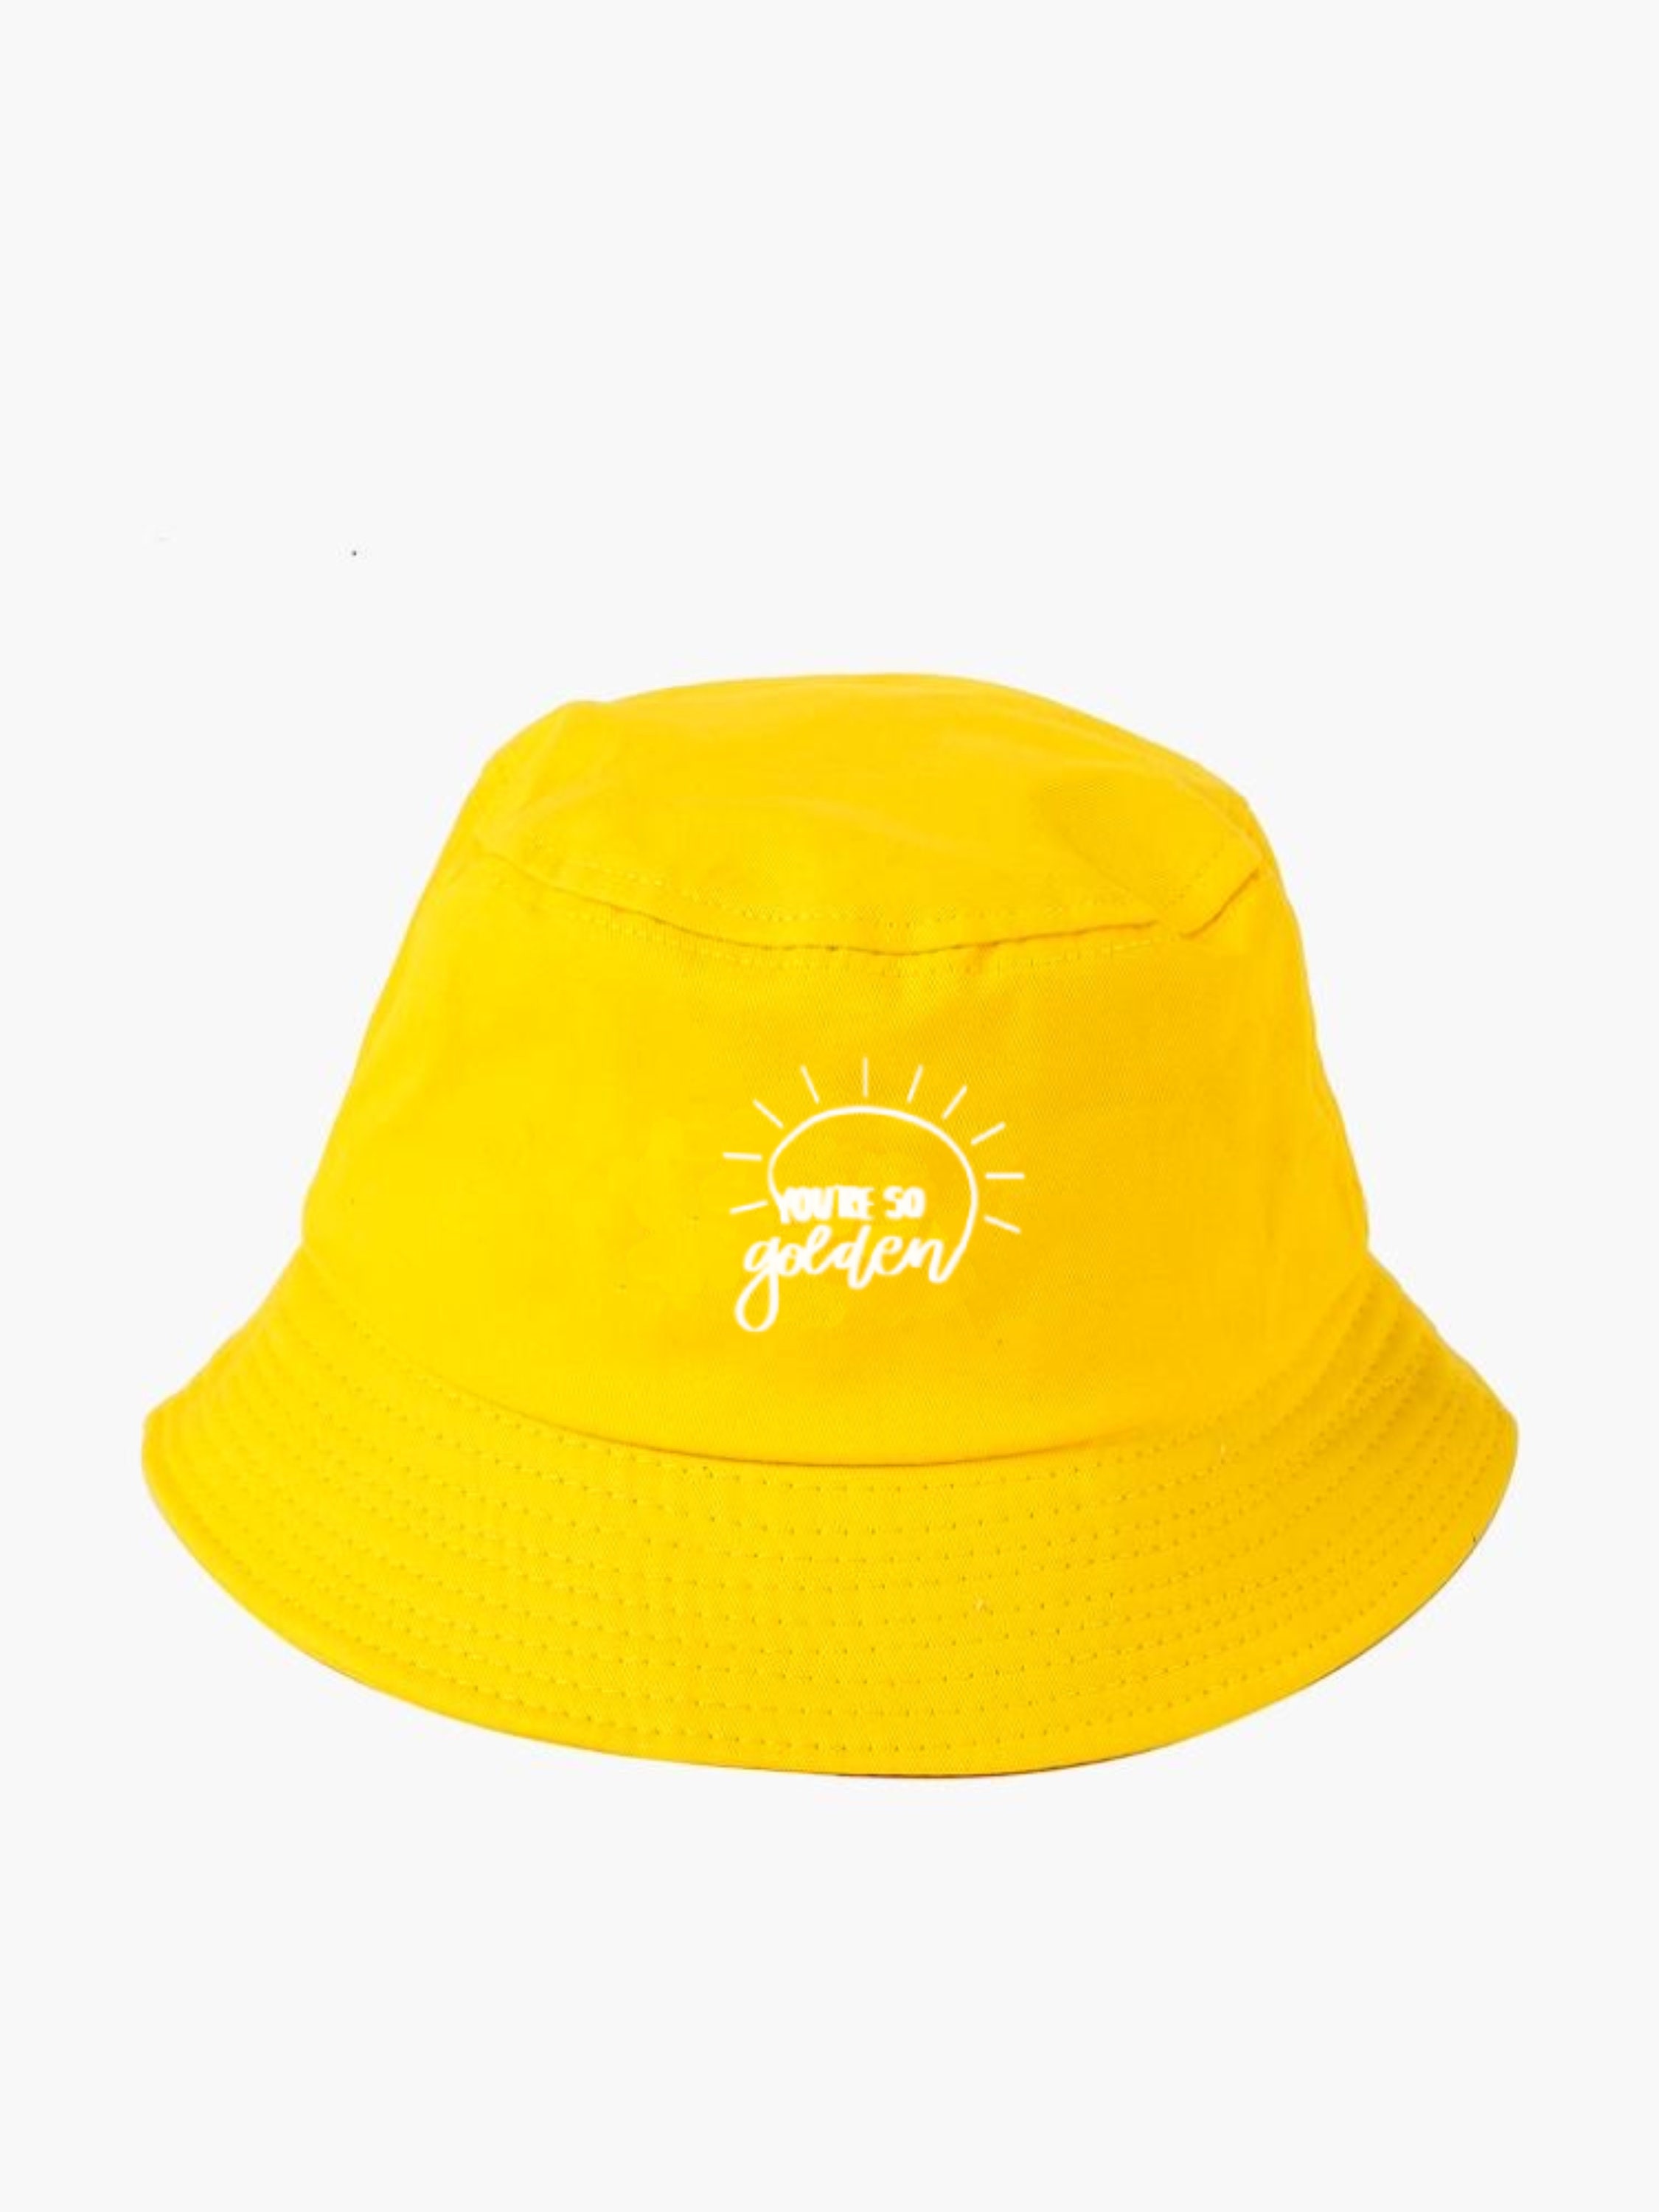 Golden Bucket Hat You'Are So Golden hat Retro hat Gift | Etsy